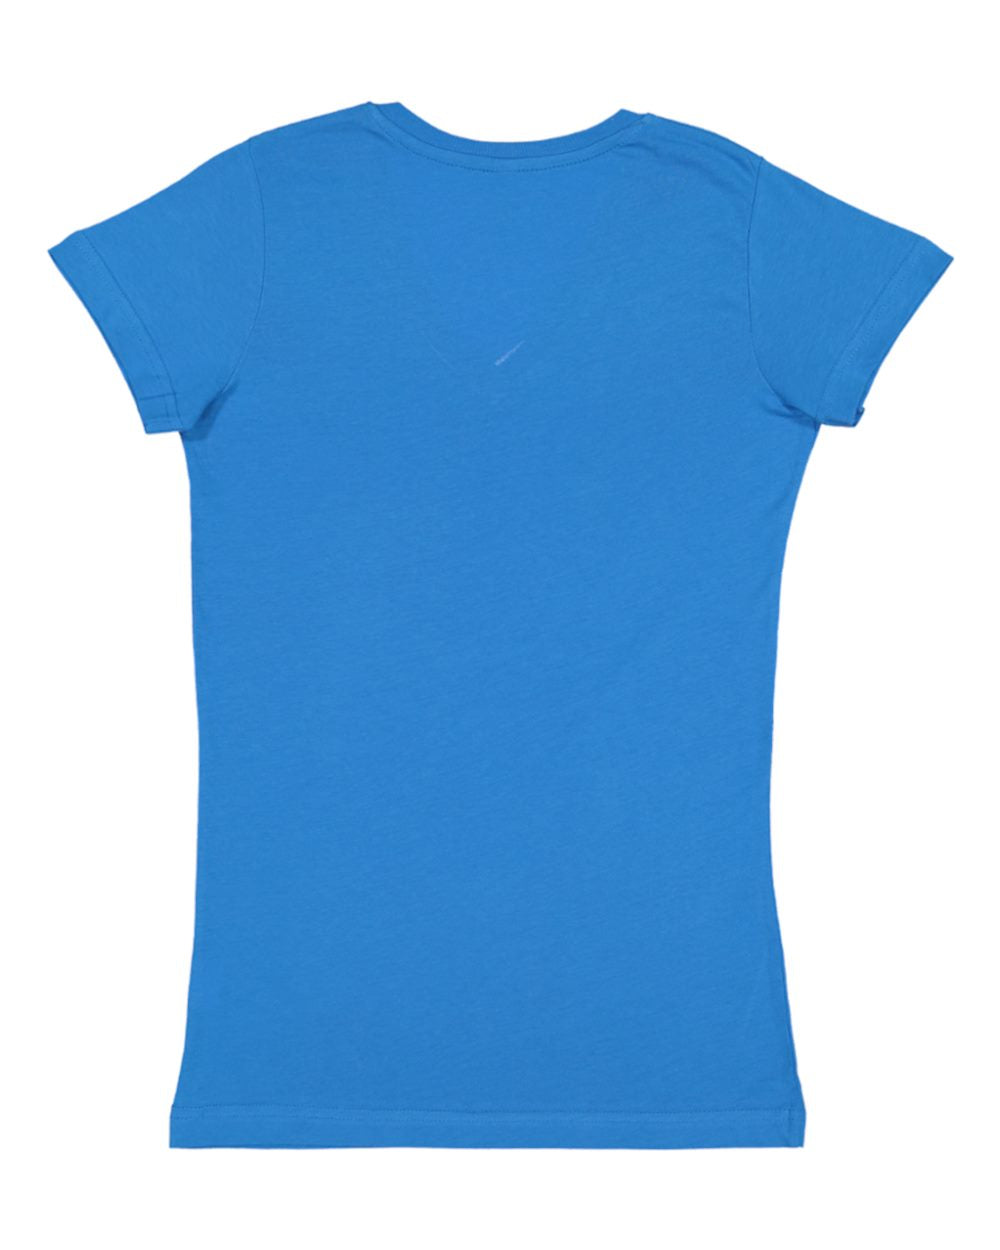 Ladies (Junior) Fitted --  (V-Neck) T-Shirt  -- 100% Cotton -- Cobalt Color